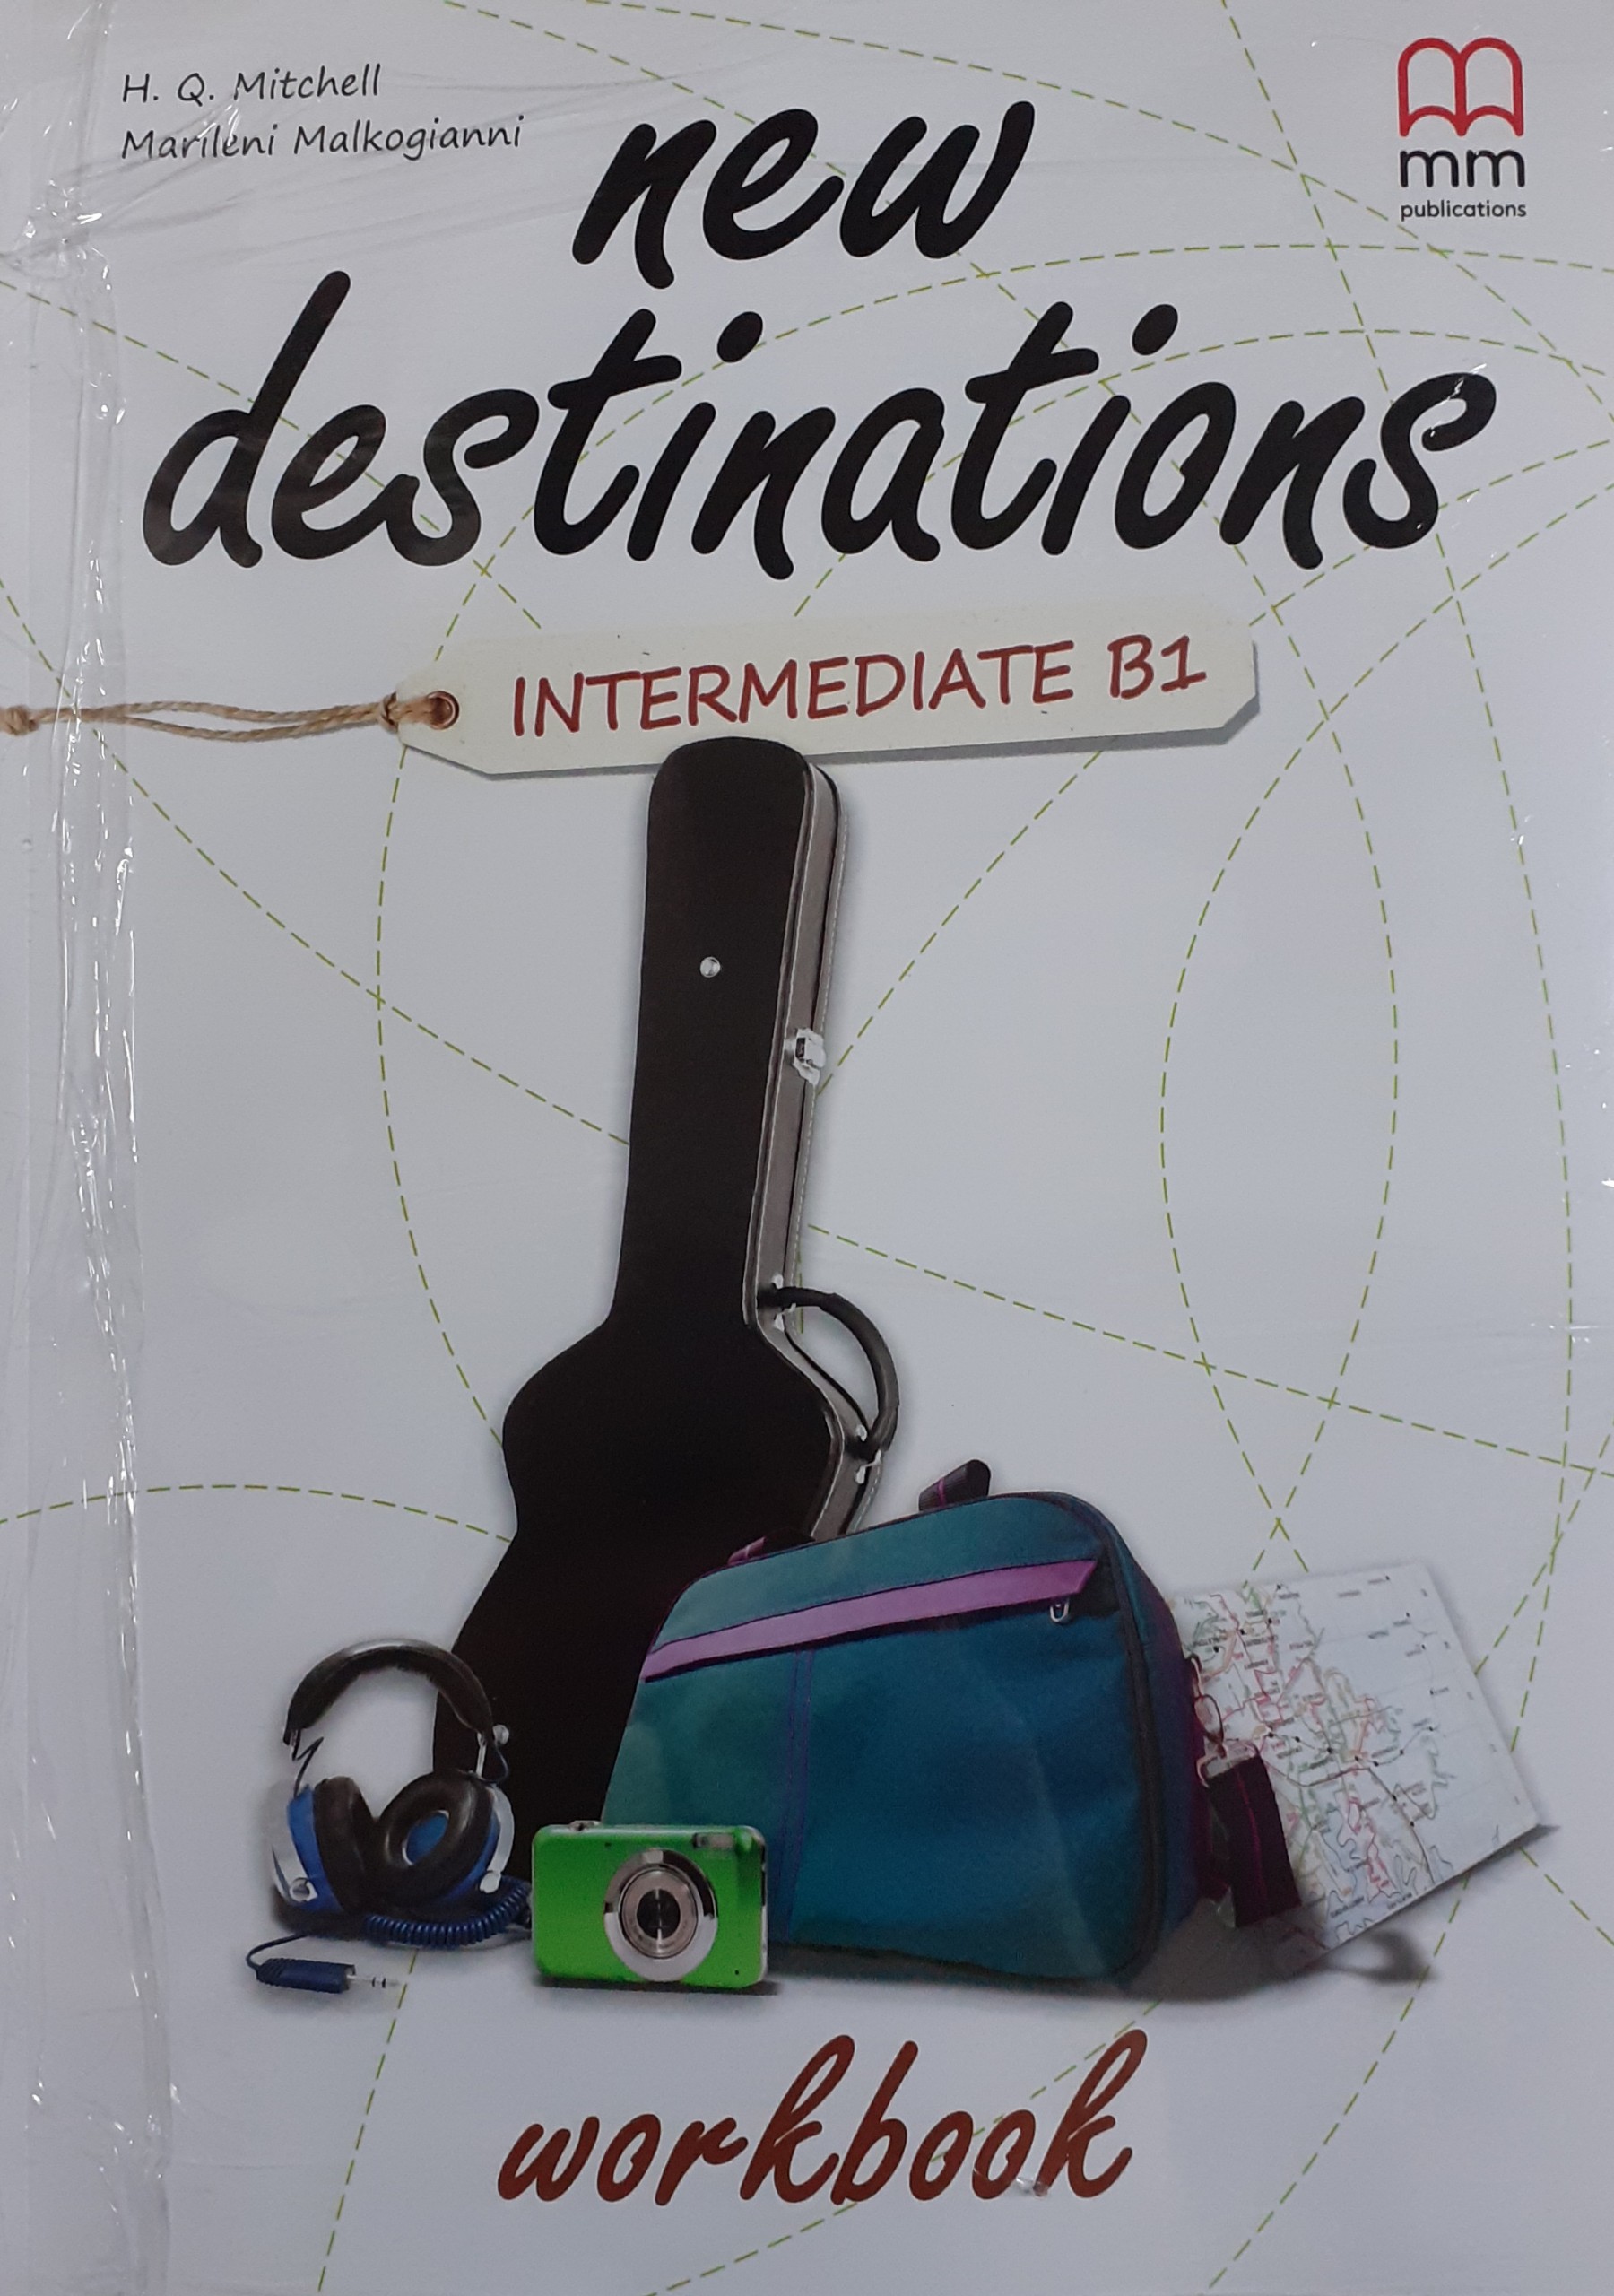 MM Publications: Sách học tiếng Anh - New Destinations Intermediate B1 - Workbook (British Edition)